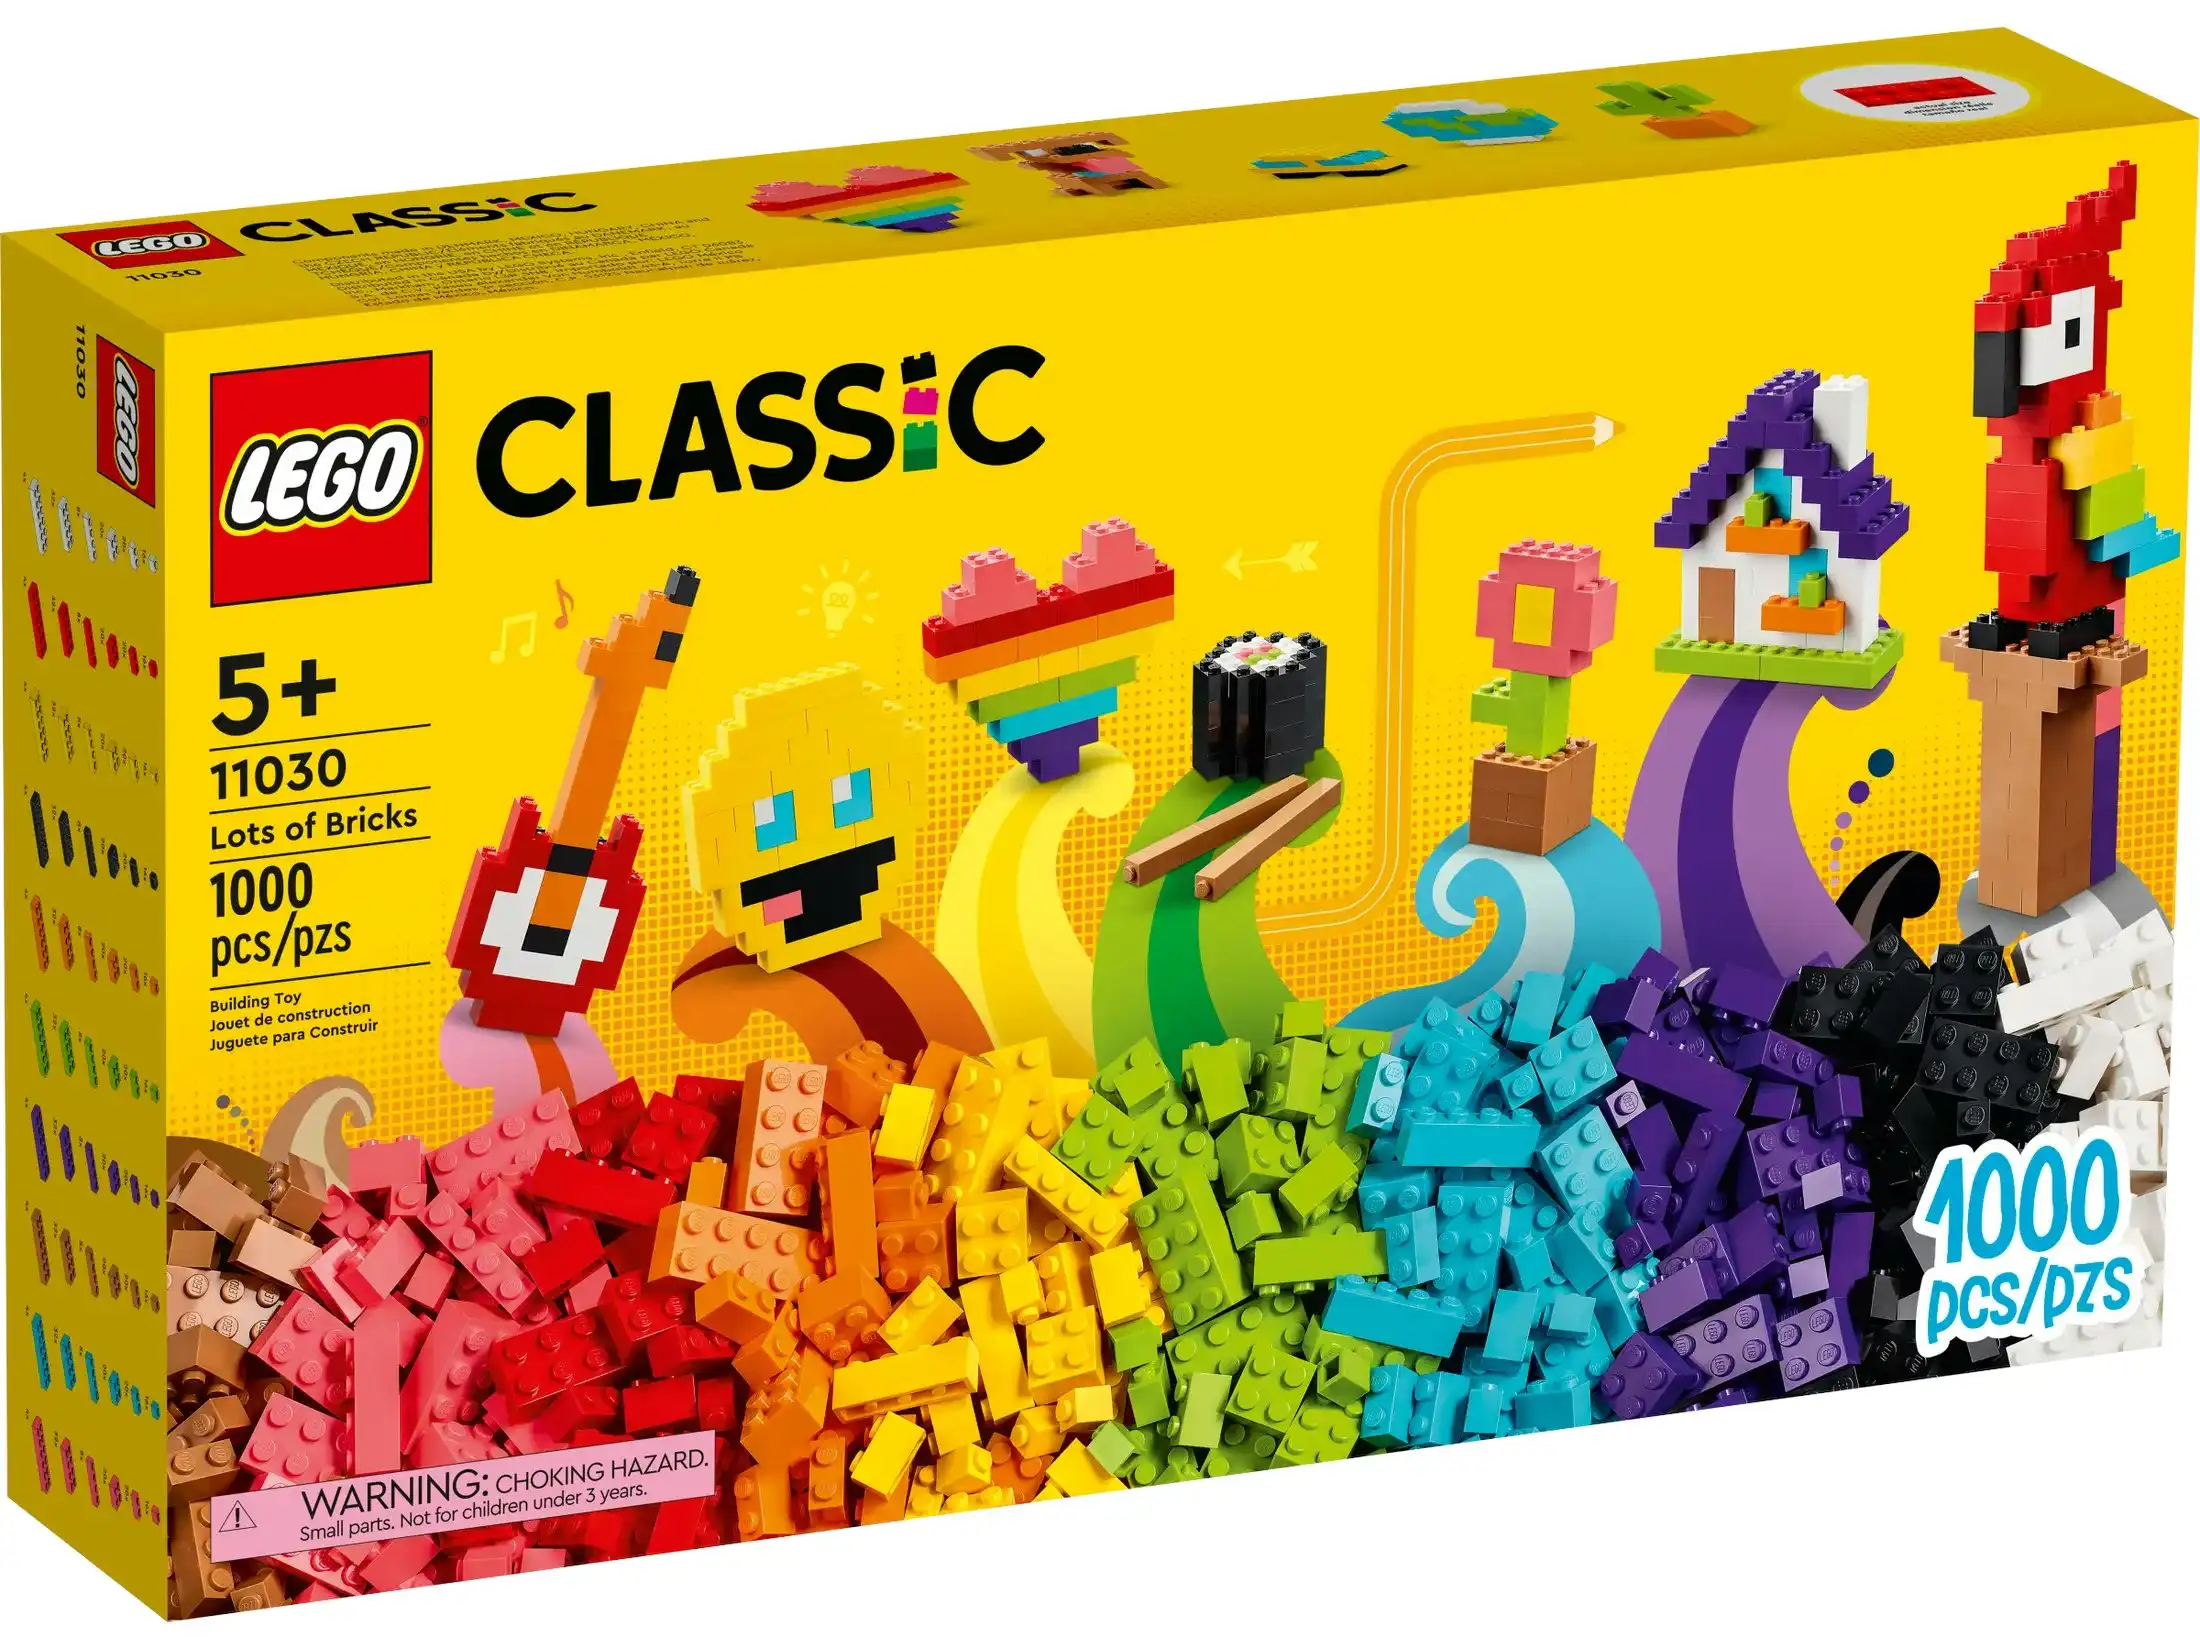 LEGO 11030 Lots of Bricks - Classic